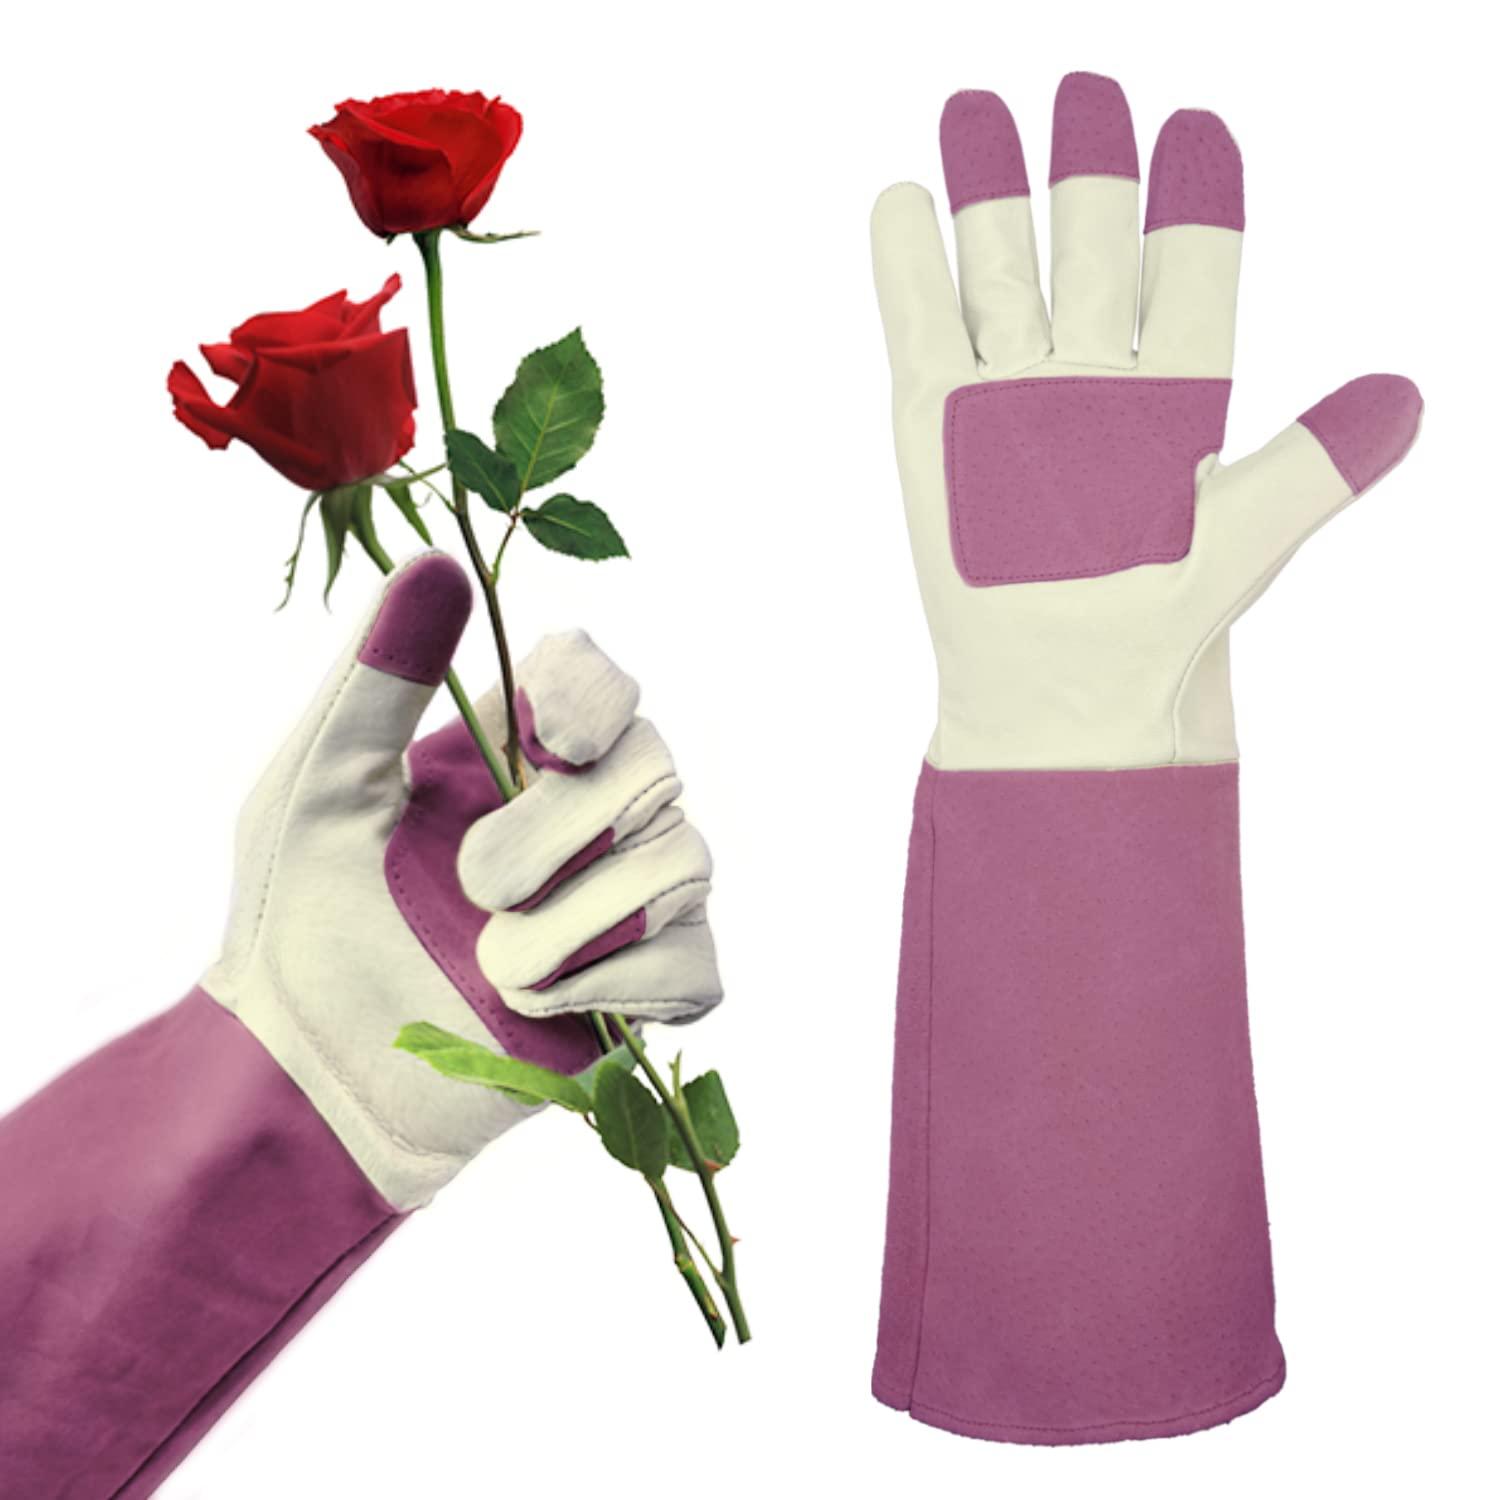 AIGEVTURE Rose Pruning Gloves Long Sleeve Thorn Proof,Rose Gardening Gloves for Men Women Long Gauntlet,Grain Pigskin Leather Pink(Large) 0